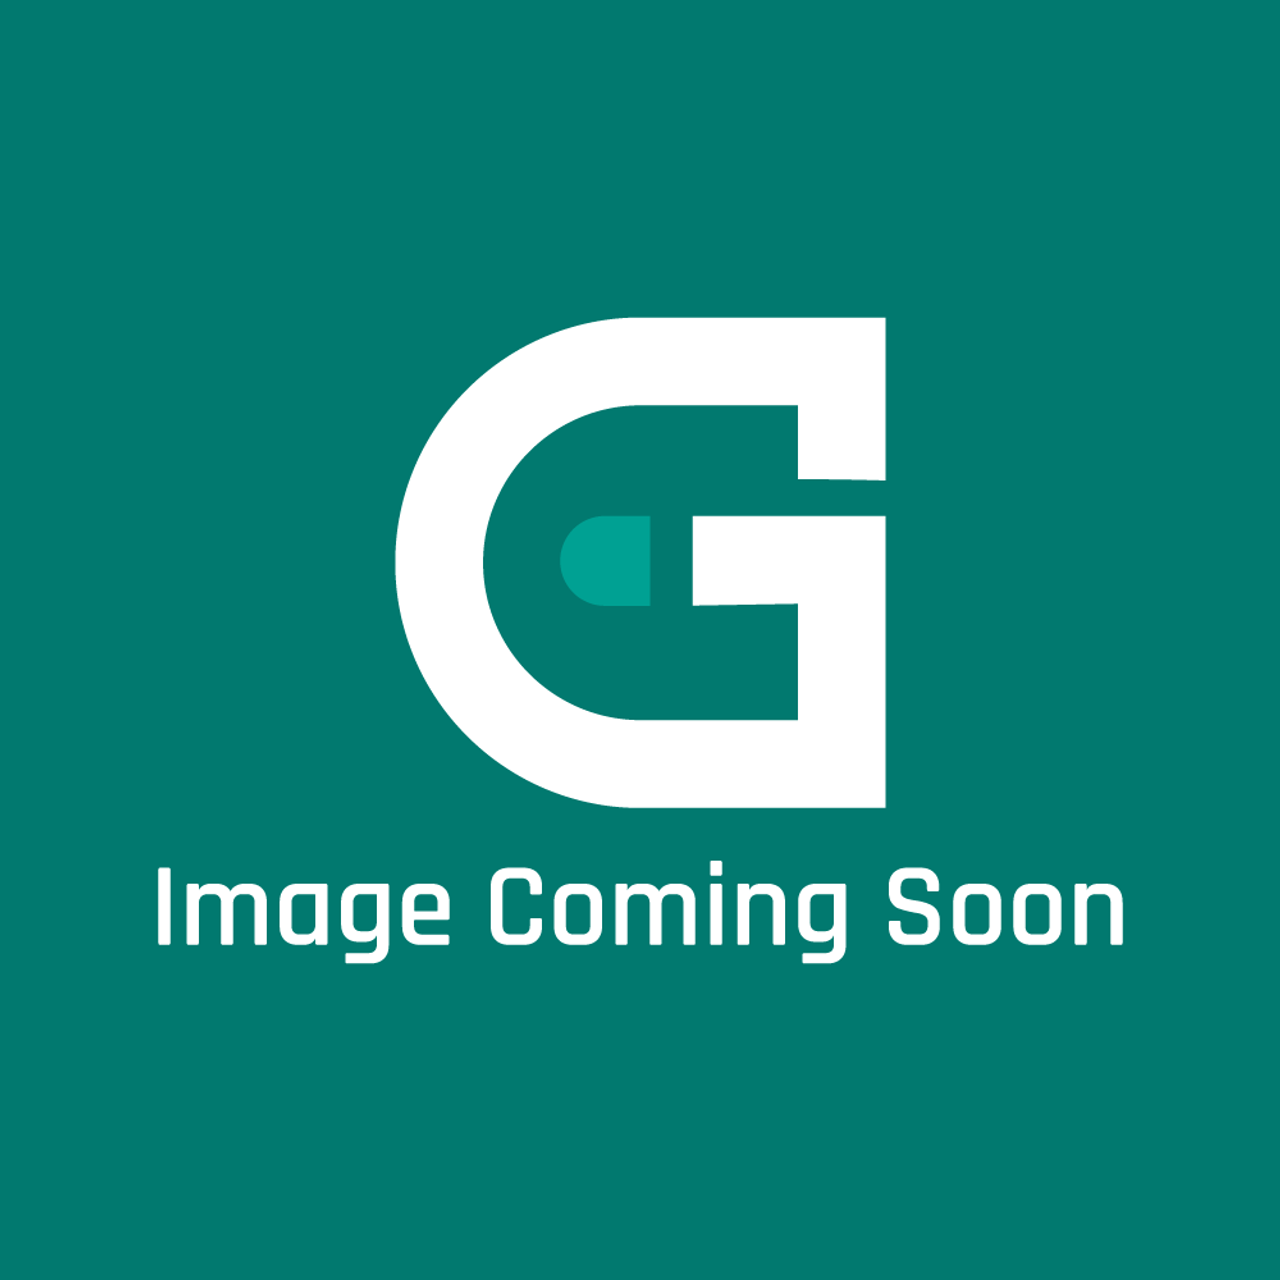 Viking G3209845LP - BURNER BOX SUB ASSY LP (3674Q) - Image Coming Soon!